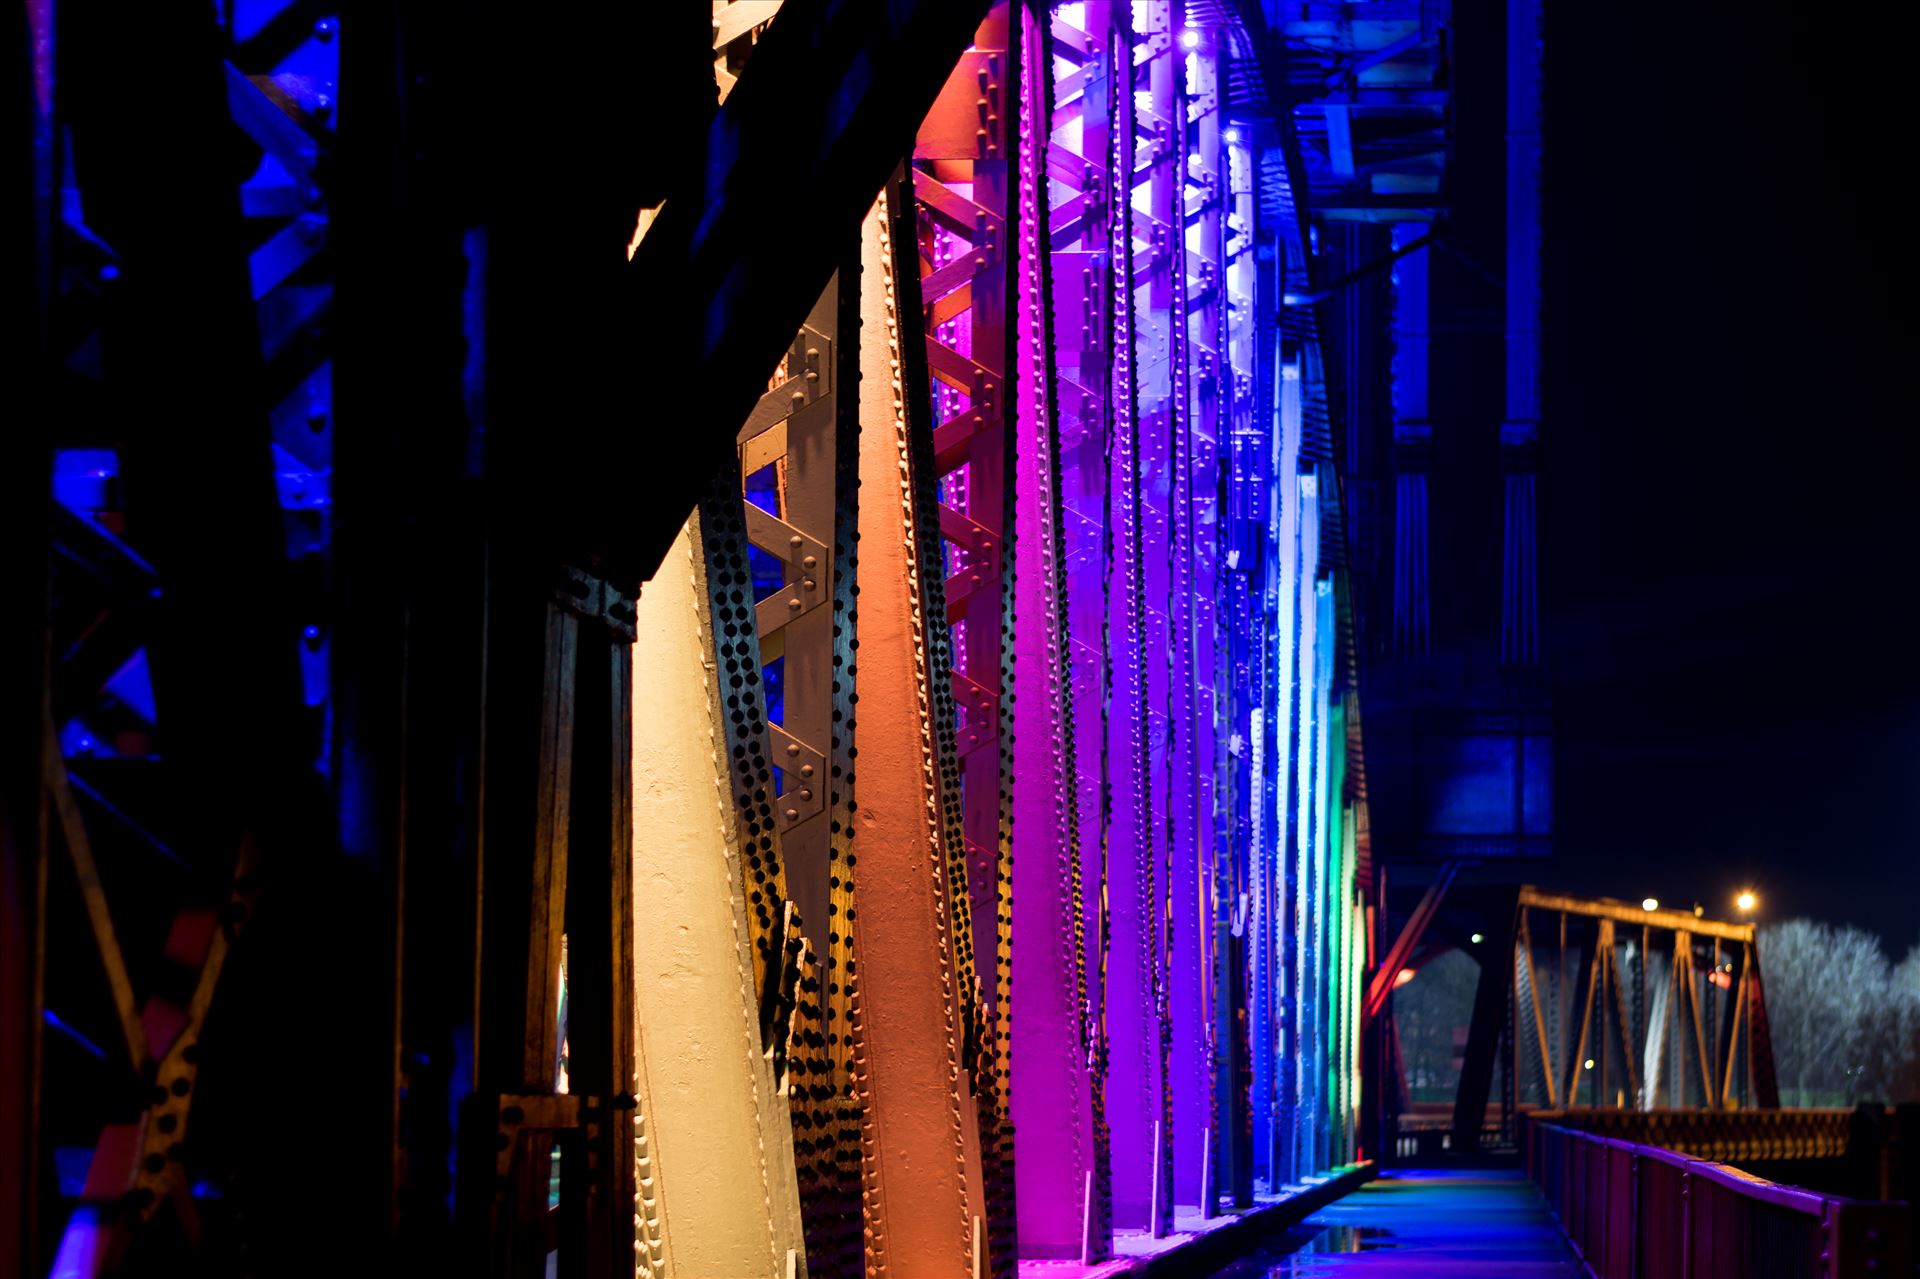 Newport Bridge Christmas Lights - Newport Bridge Rainbow Lights by AJ Stoves Photography